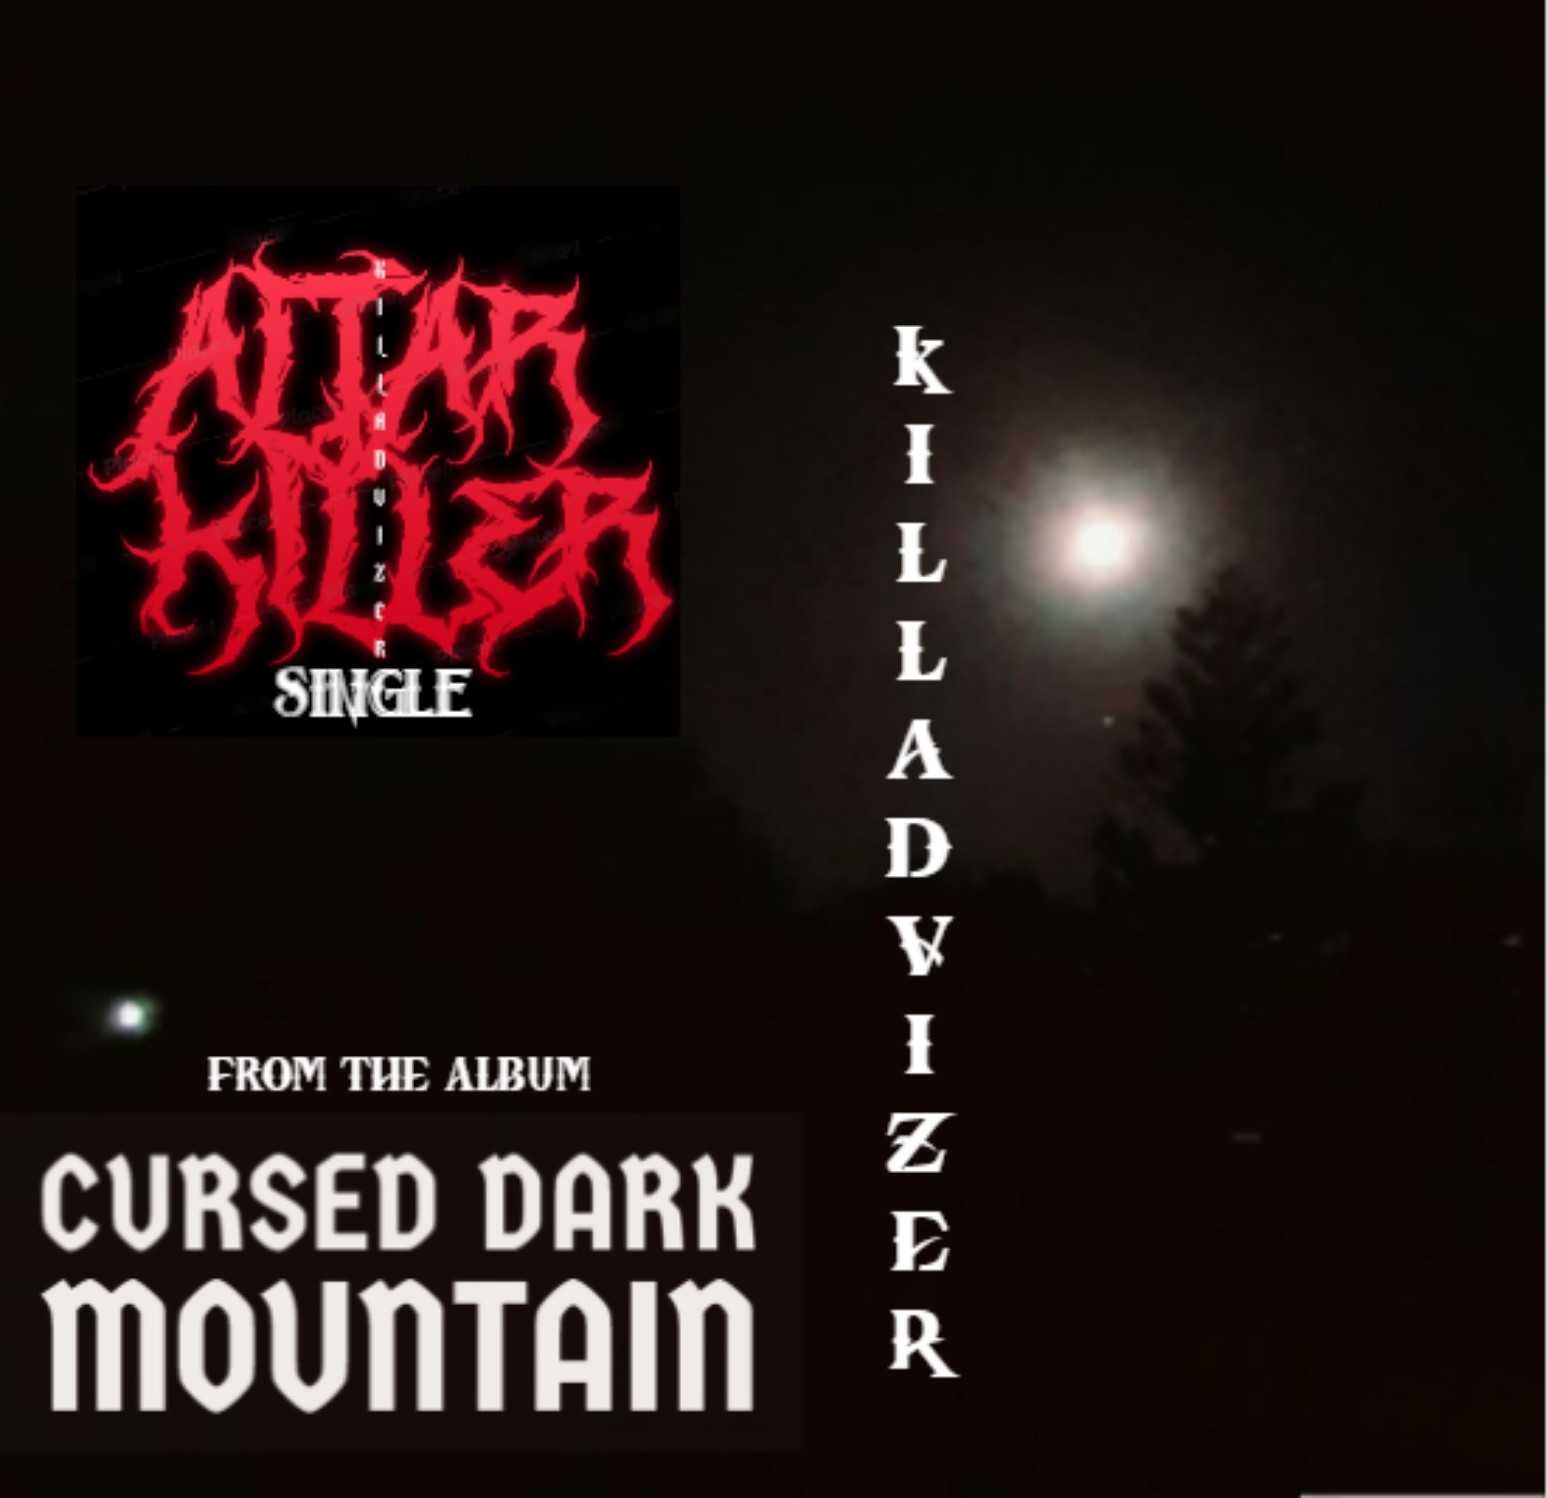 Altar killer single from the album Cursed Black Mountain